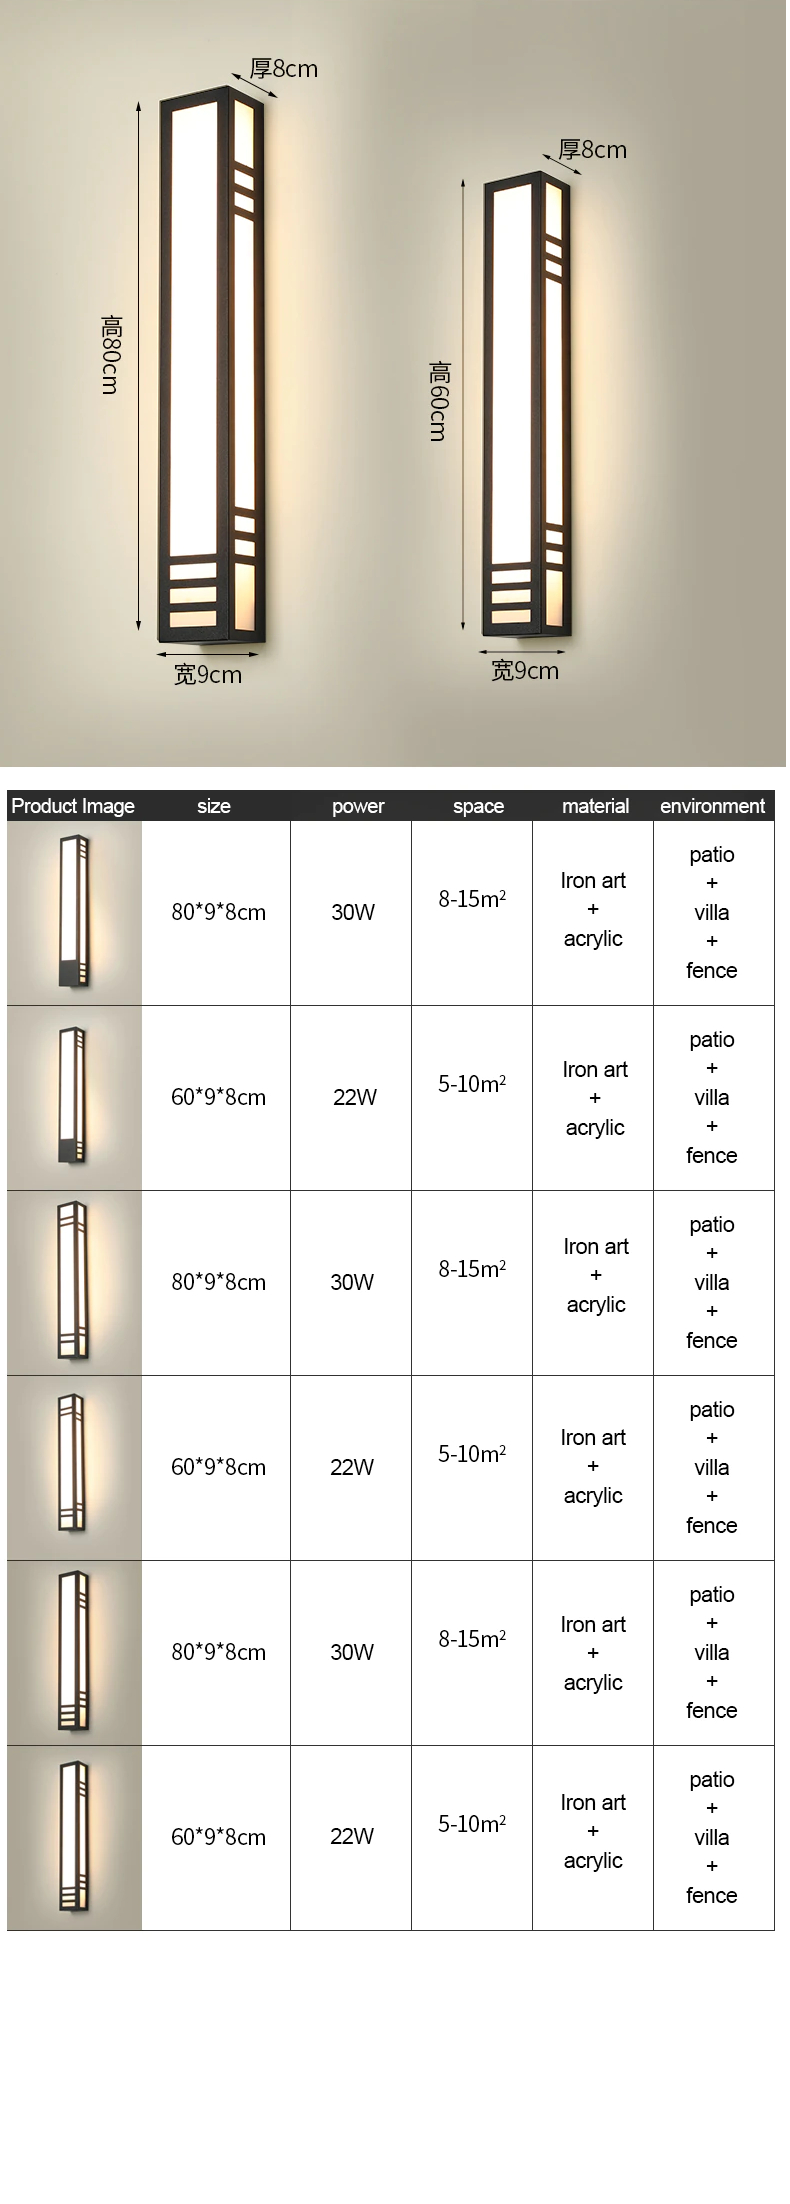 LED Outdoor Long Wall Light Waterproof IP65 Lamp 110V 220V